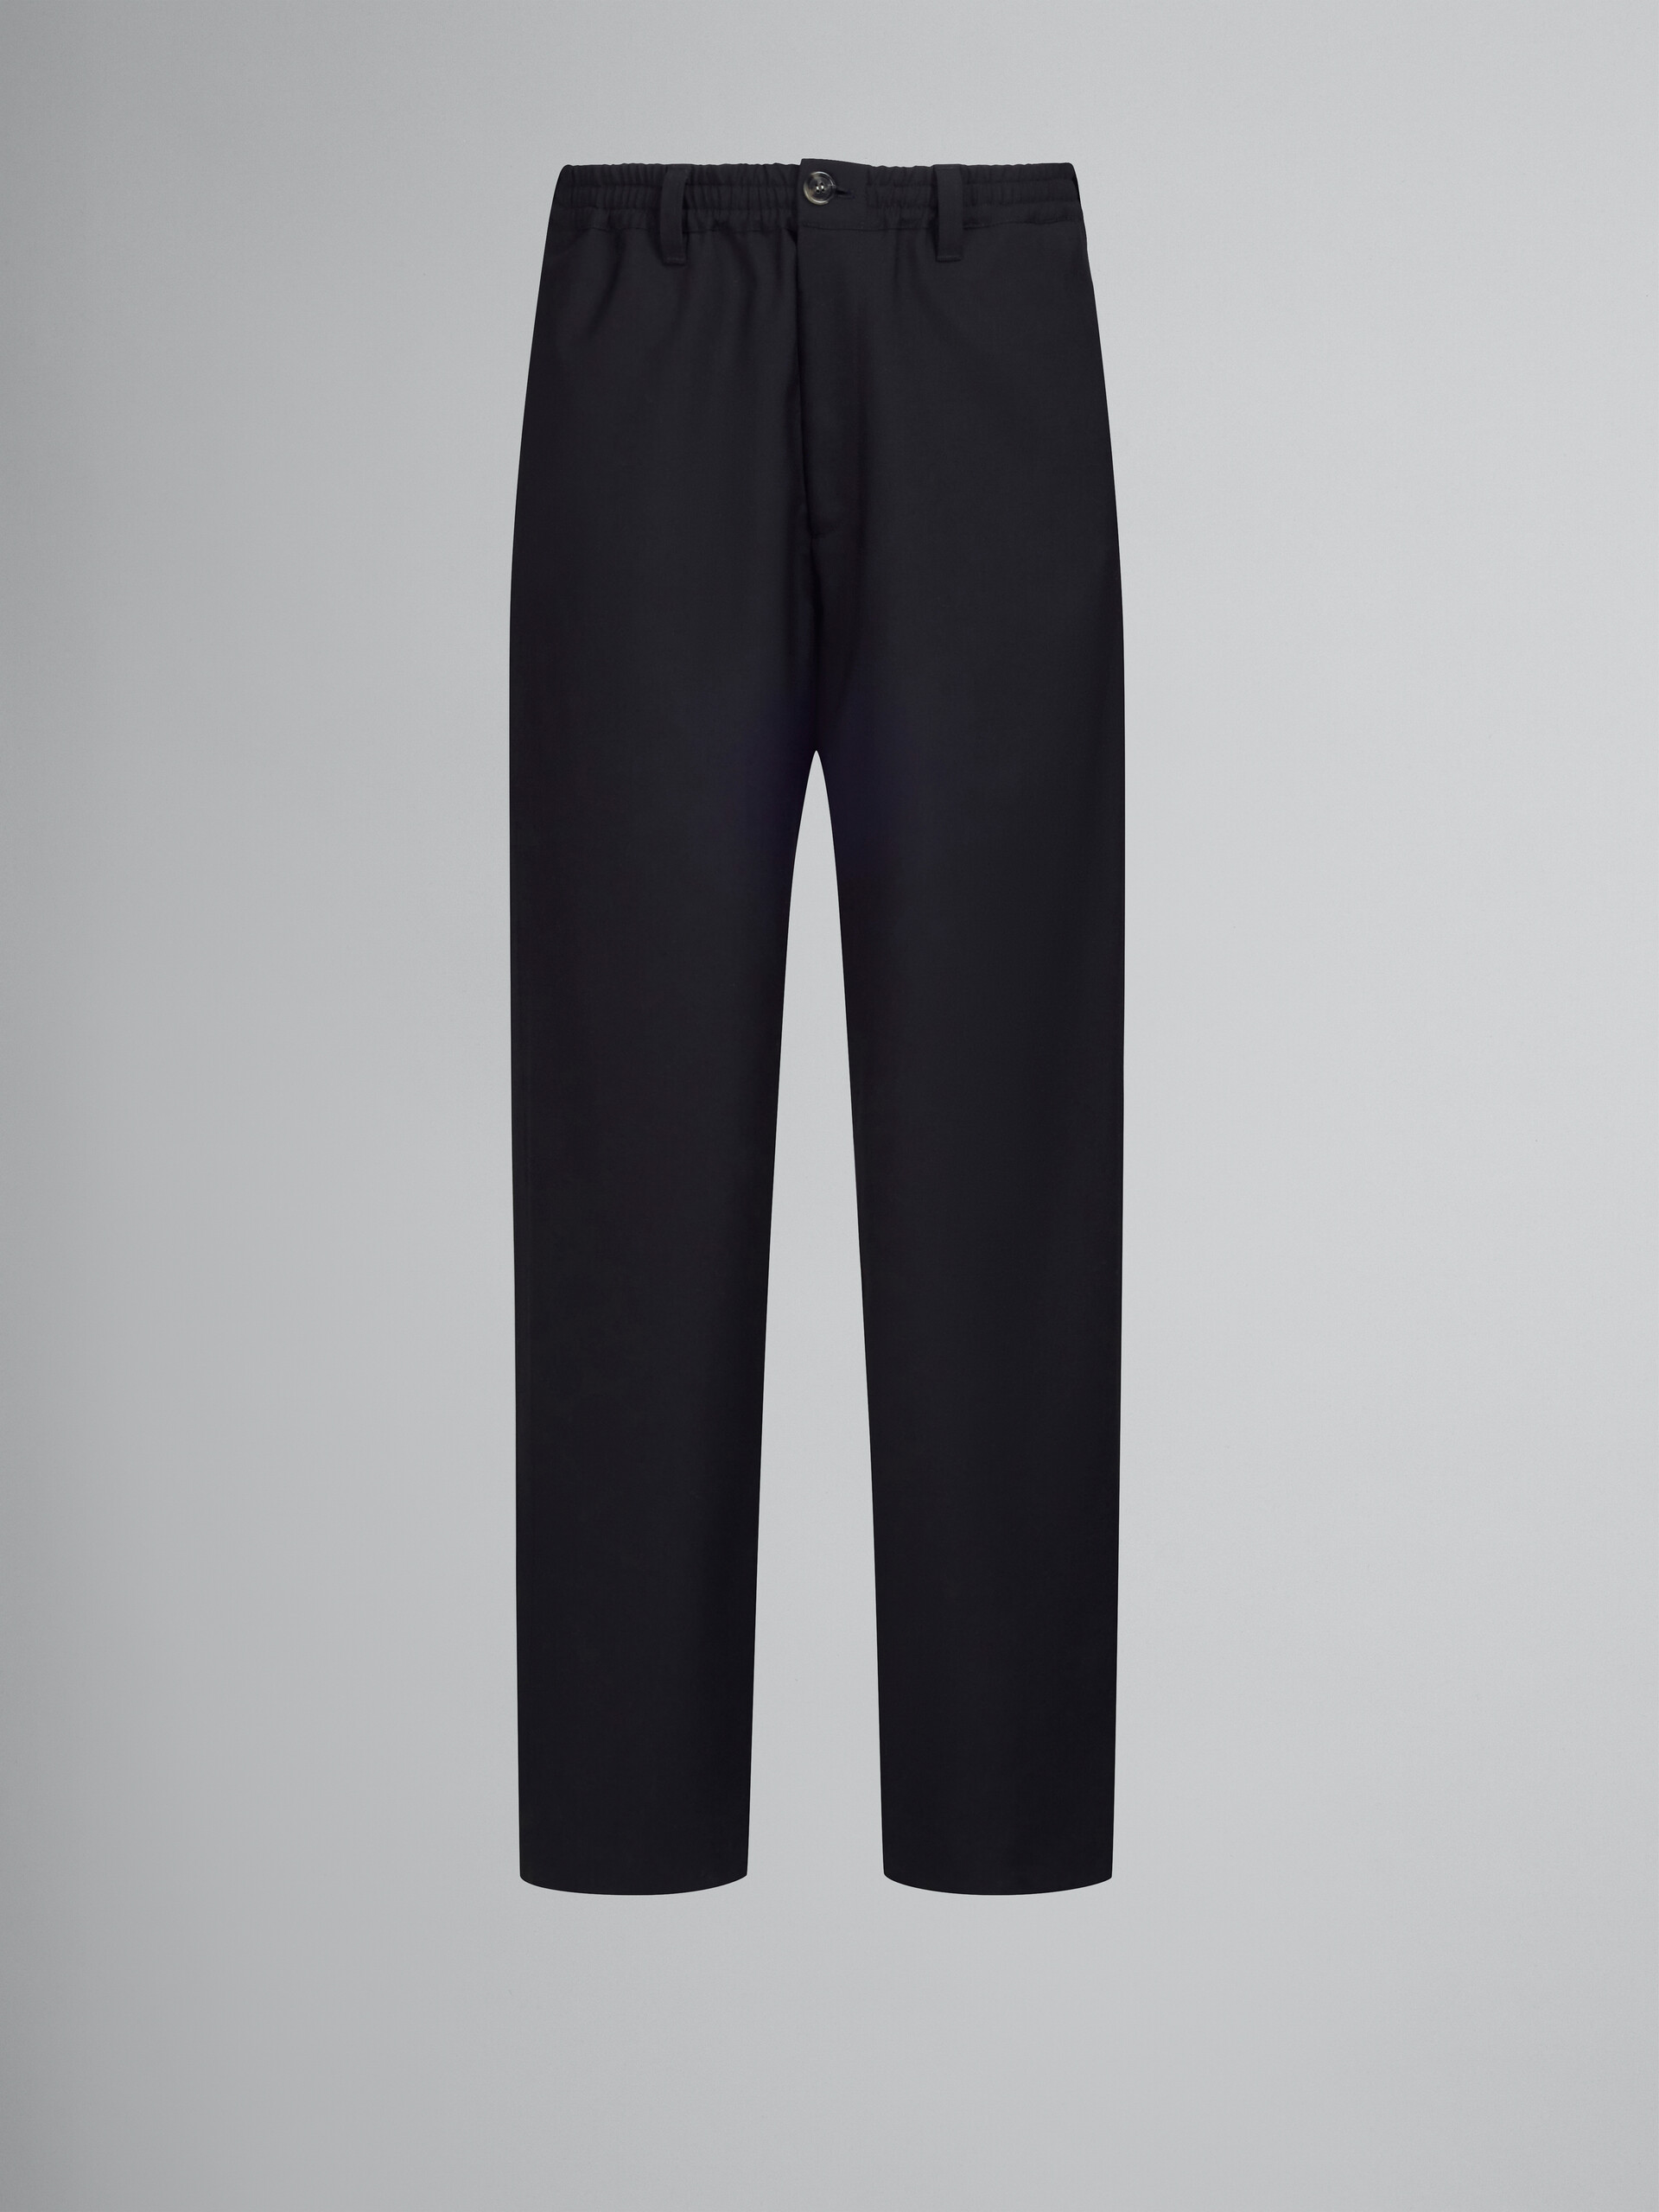 Pantalón negro de lana tropical - Pantalones - Image 1